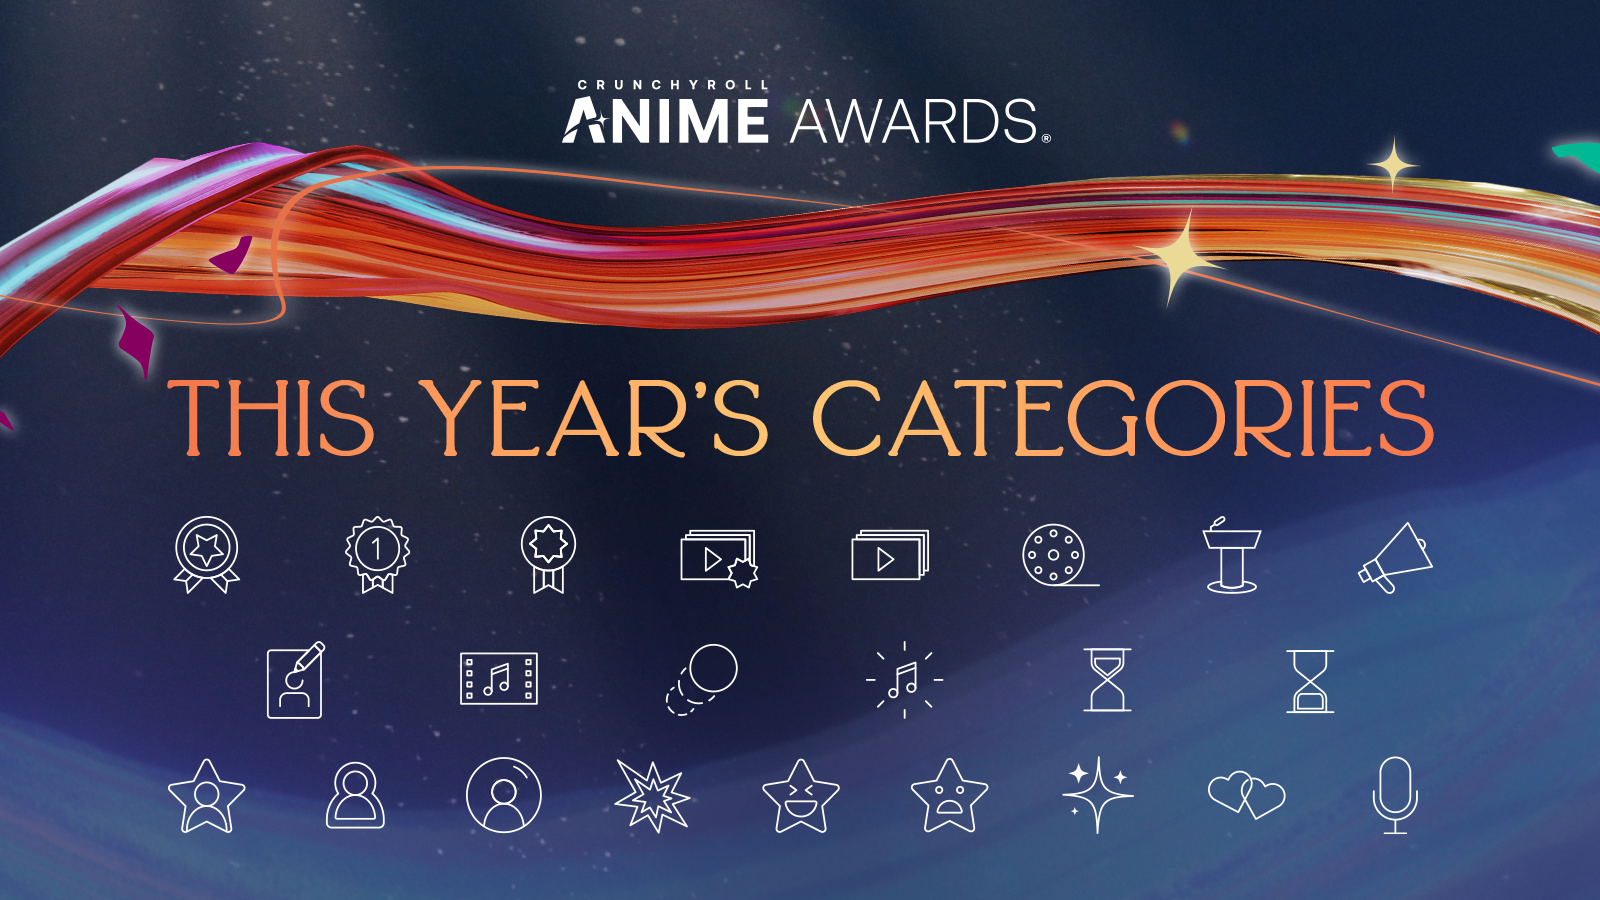 Crunchyroll reveals 2023 Anime Awards winners